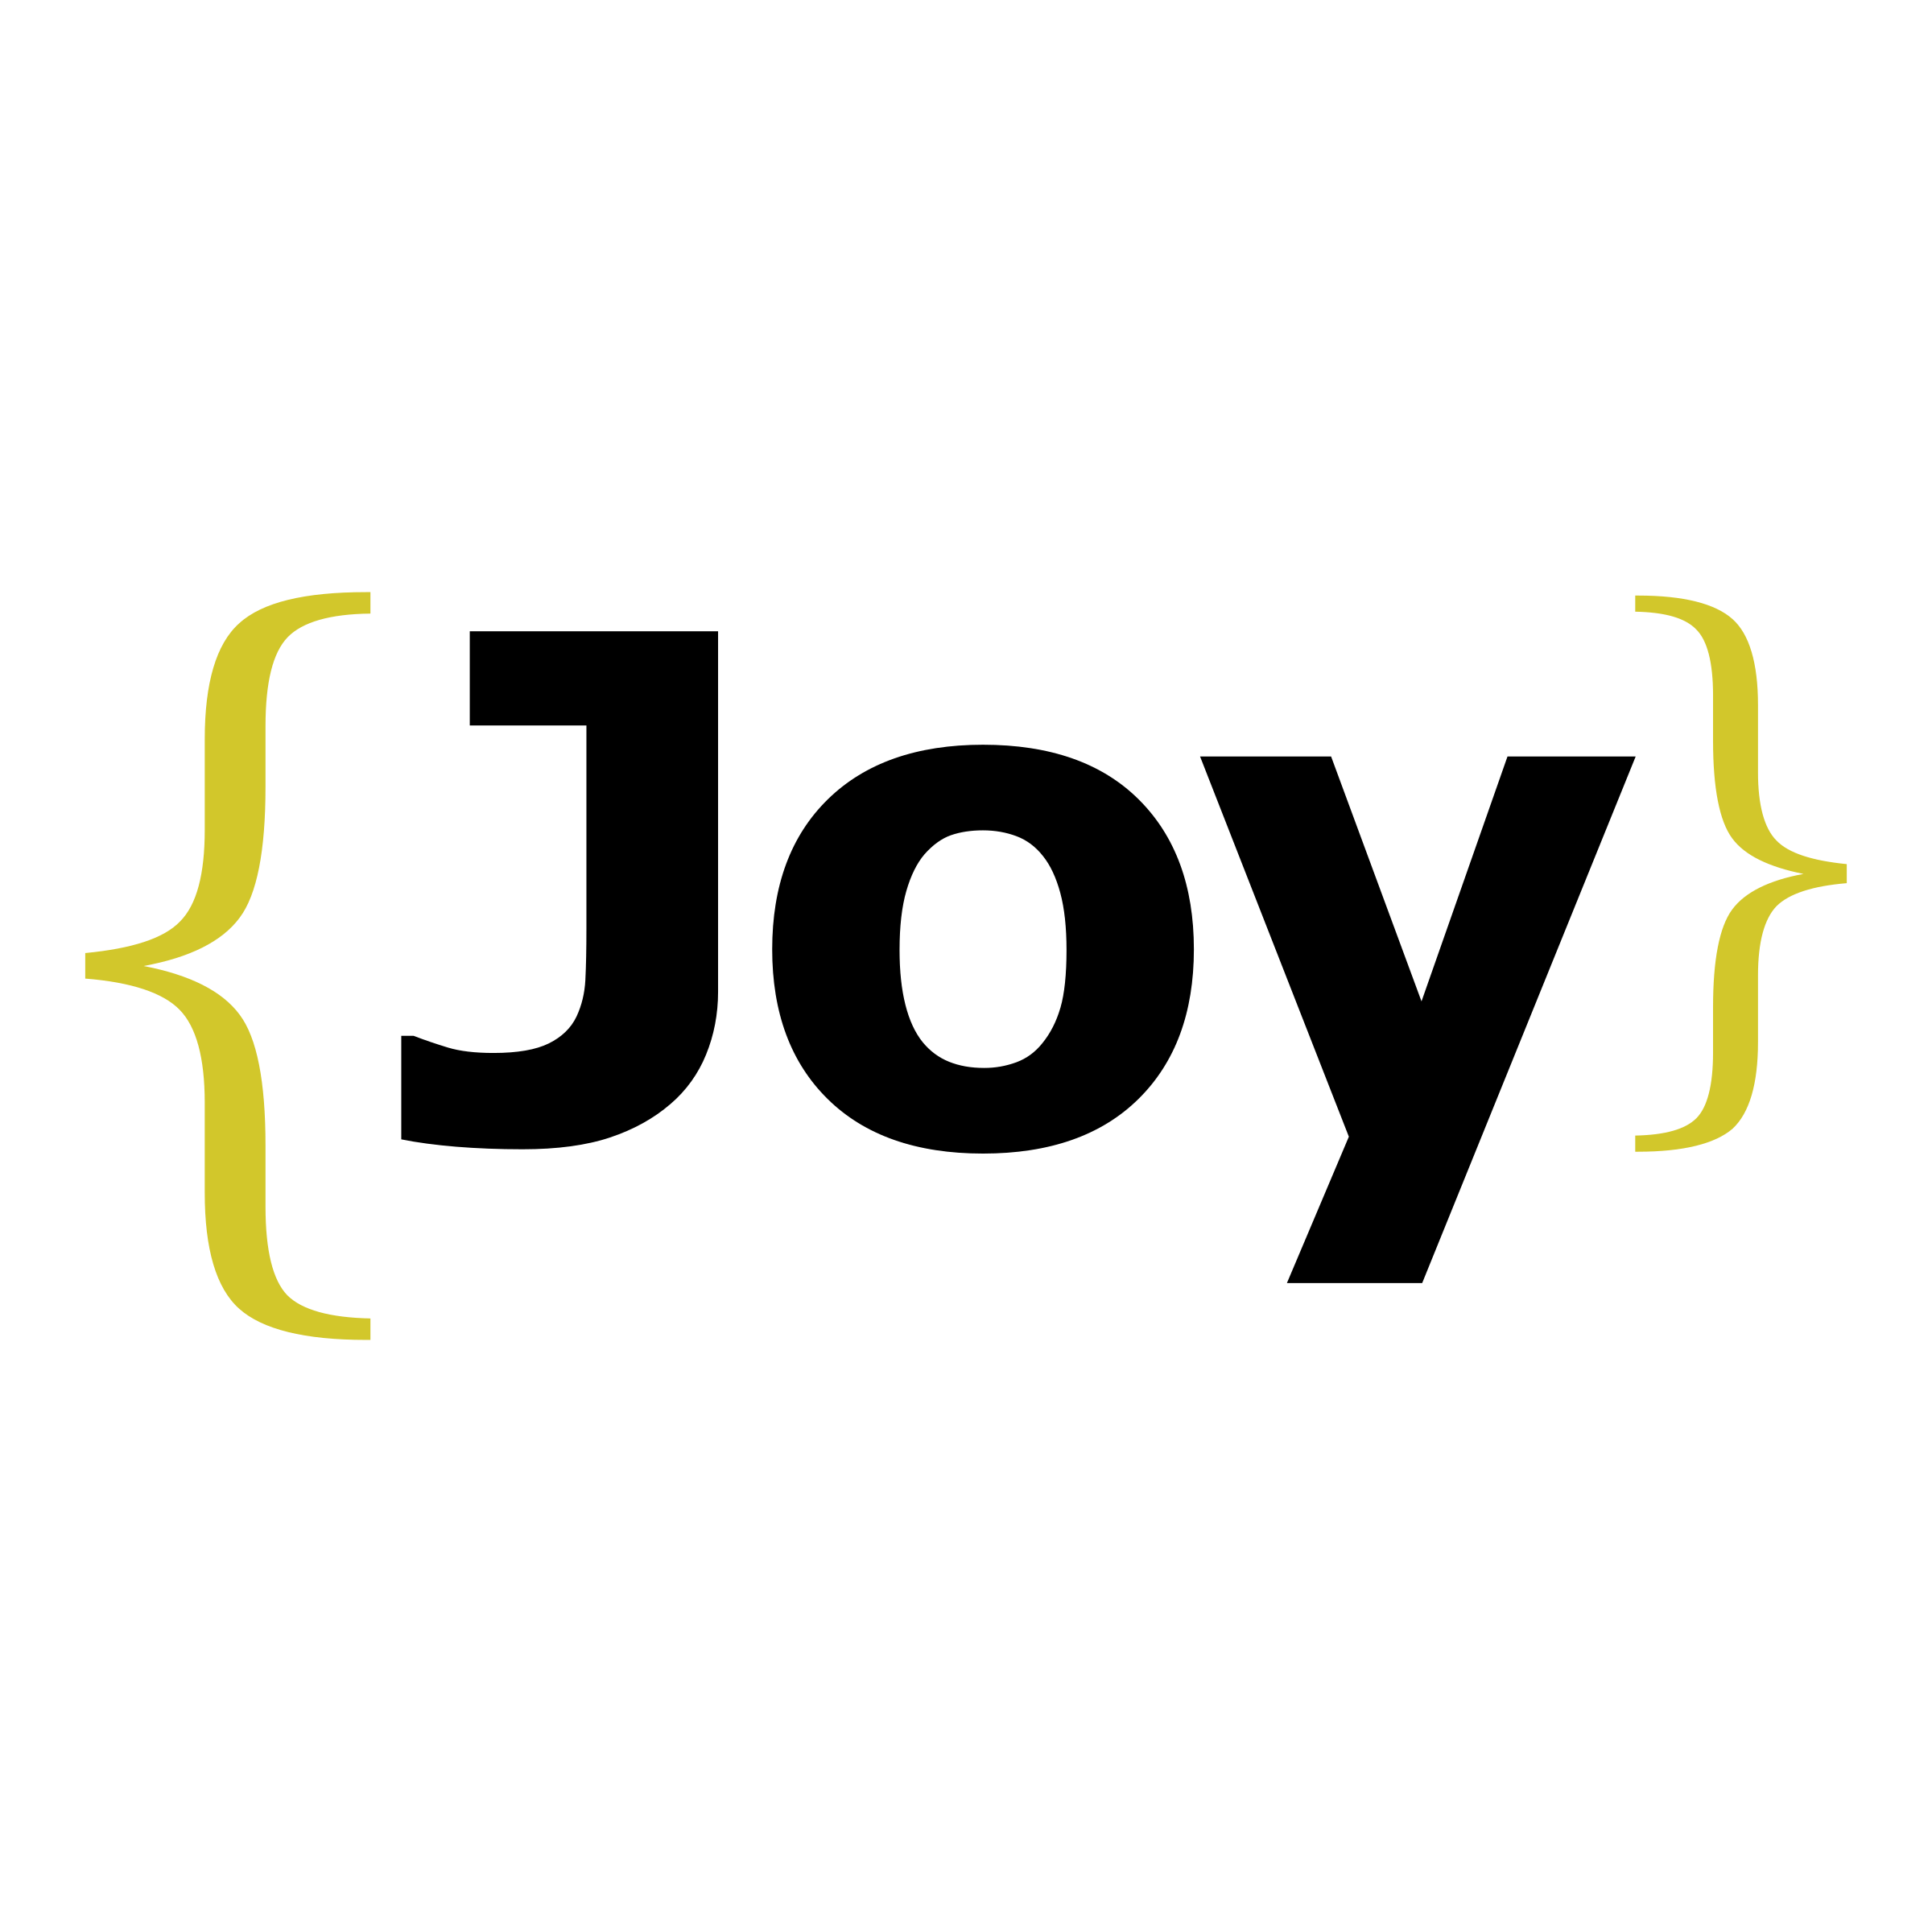 Joy Logo - Joy Logo PNG Transparent & SVG Vector - Freebie Supply